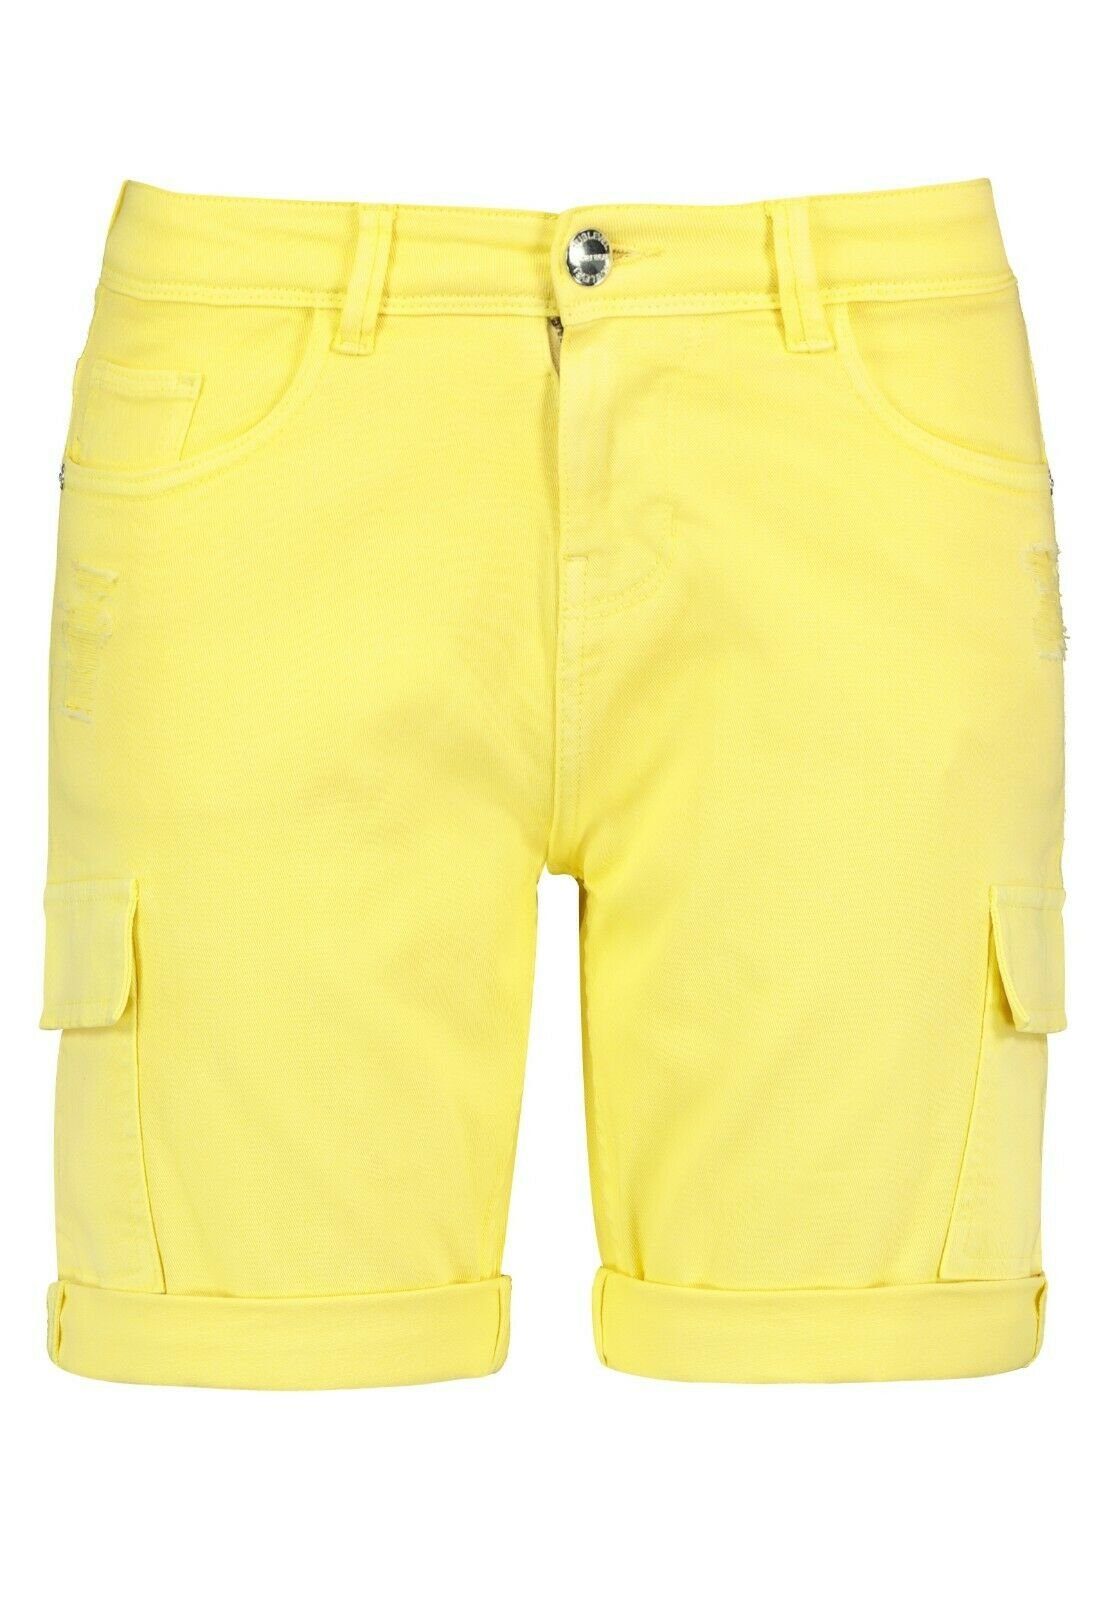 SUBLEVEL Bermudas Damen Cargo Shorts citrus Hose Bermuda Short yellow Denim Denim Stretch Kurze Shorts